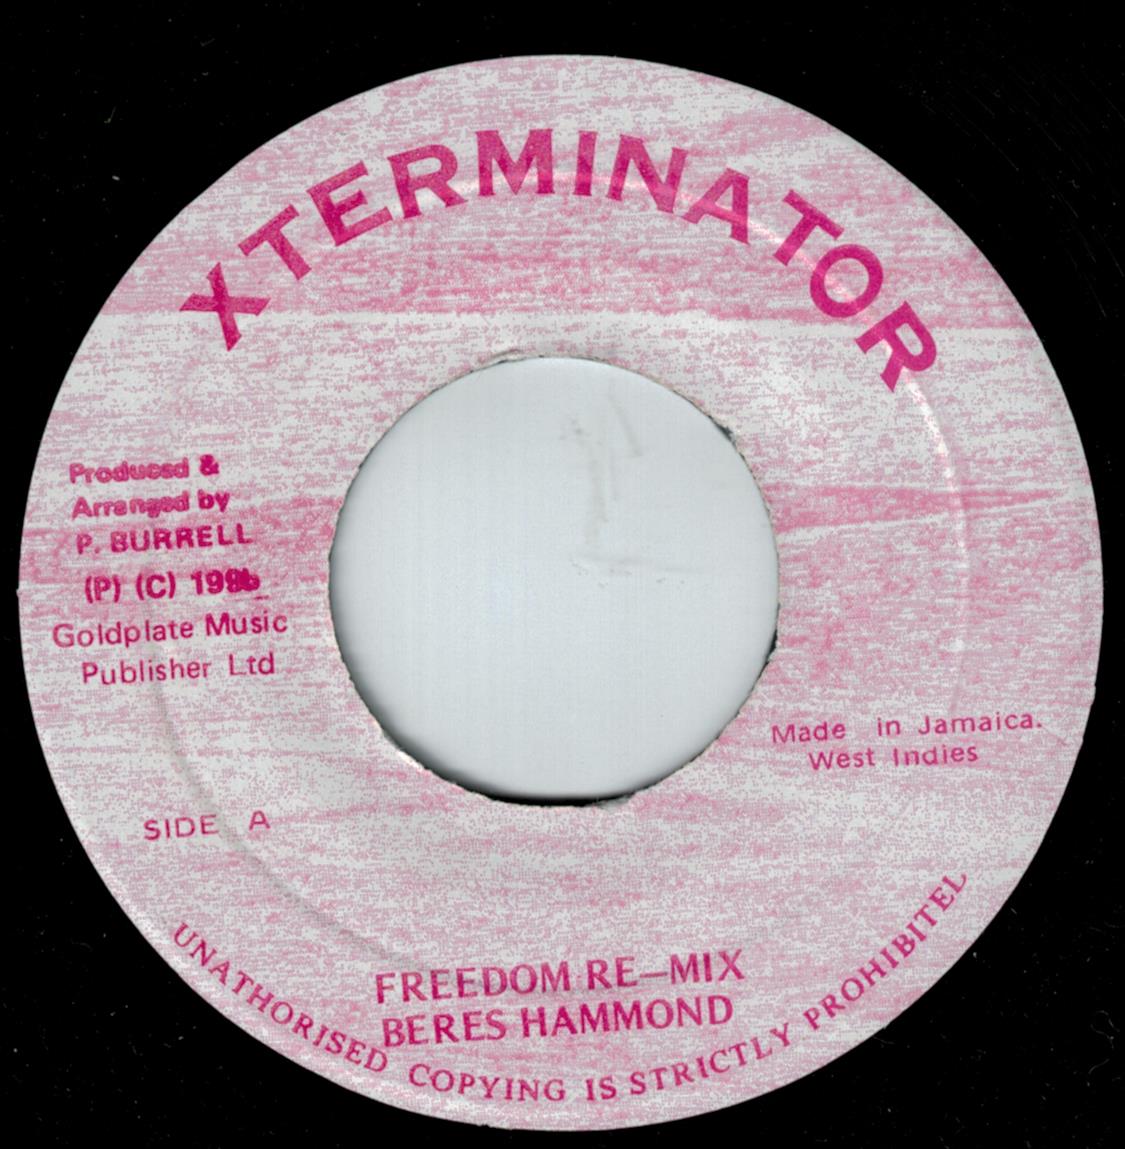 Beres Hammond - Freedom Re-Mix / Version (7")